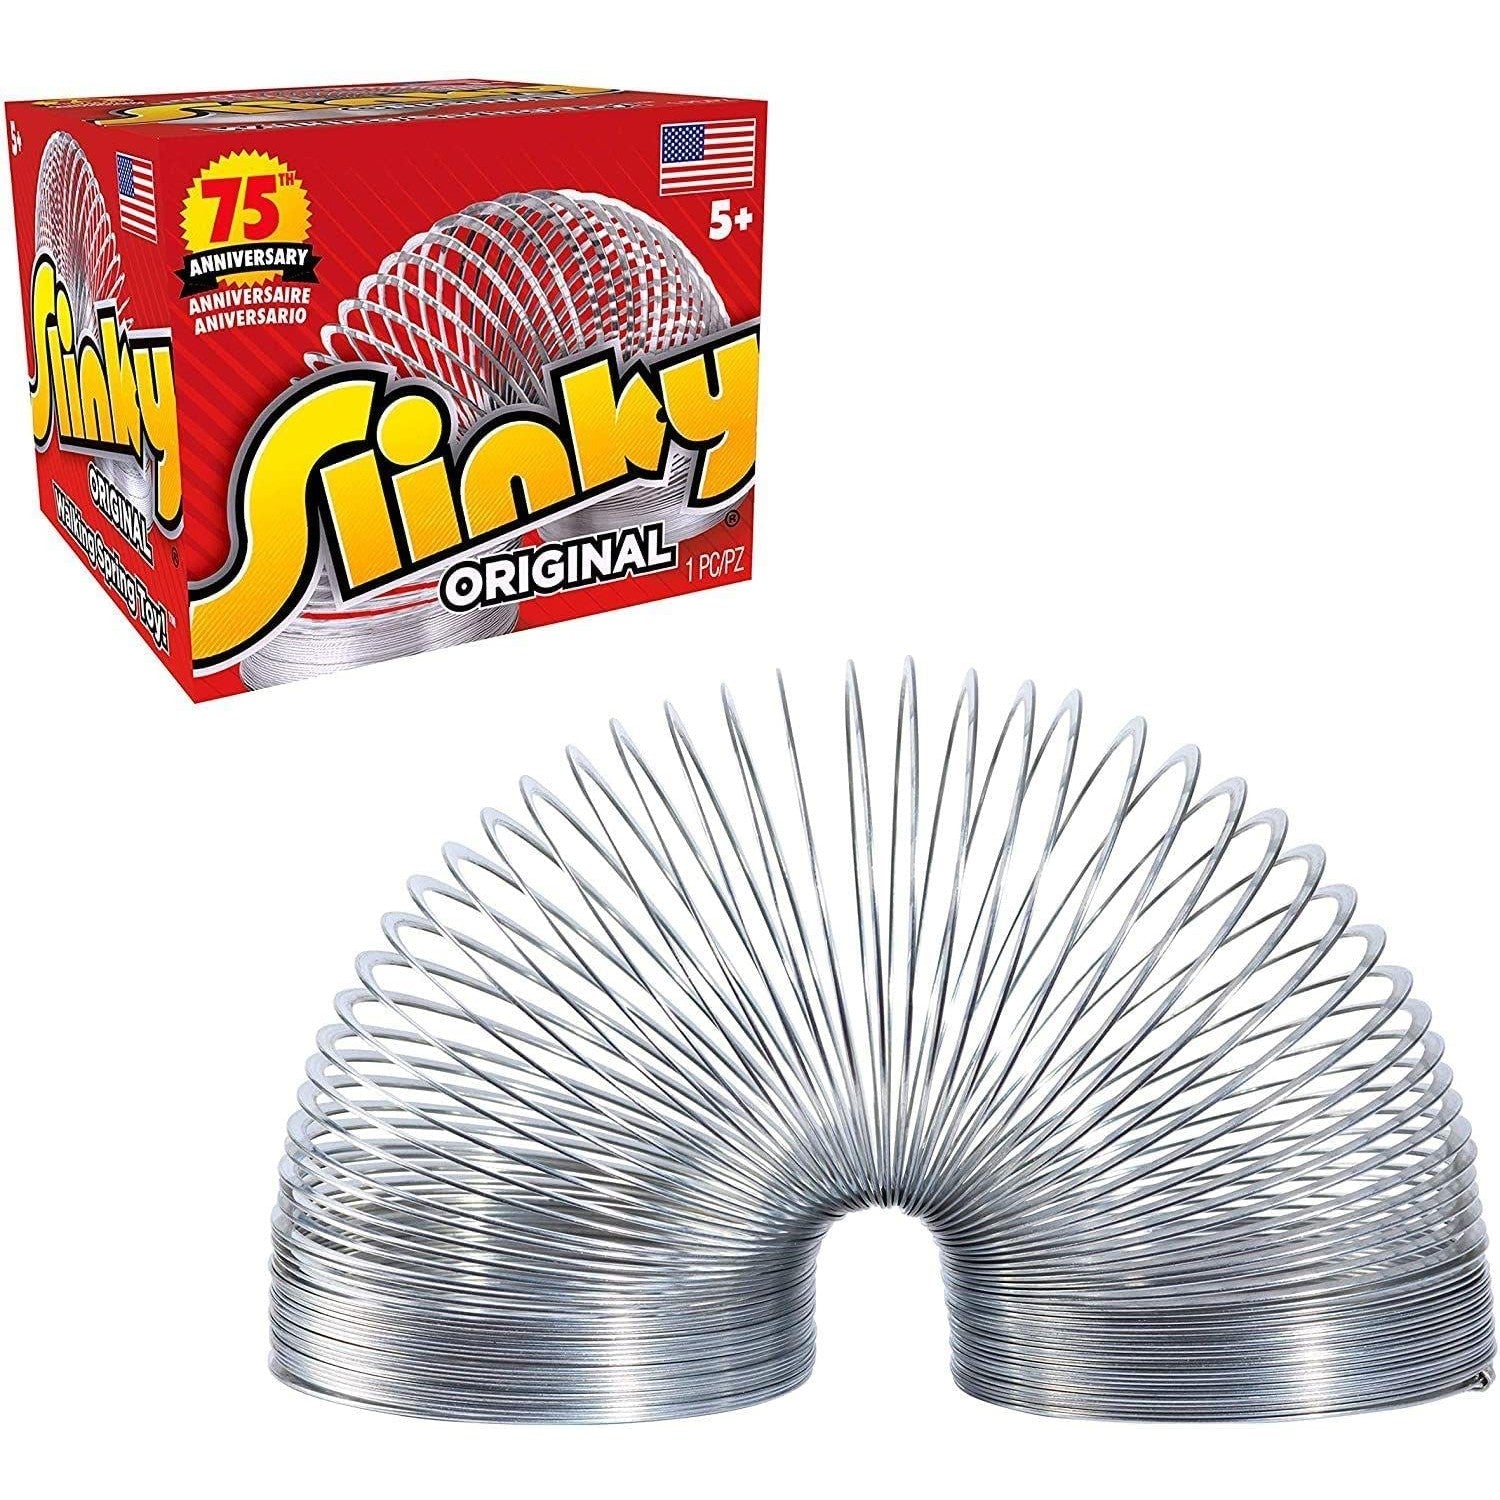 The original Slinky walking toy.